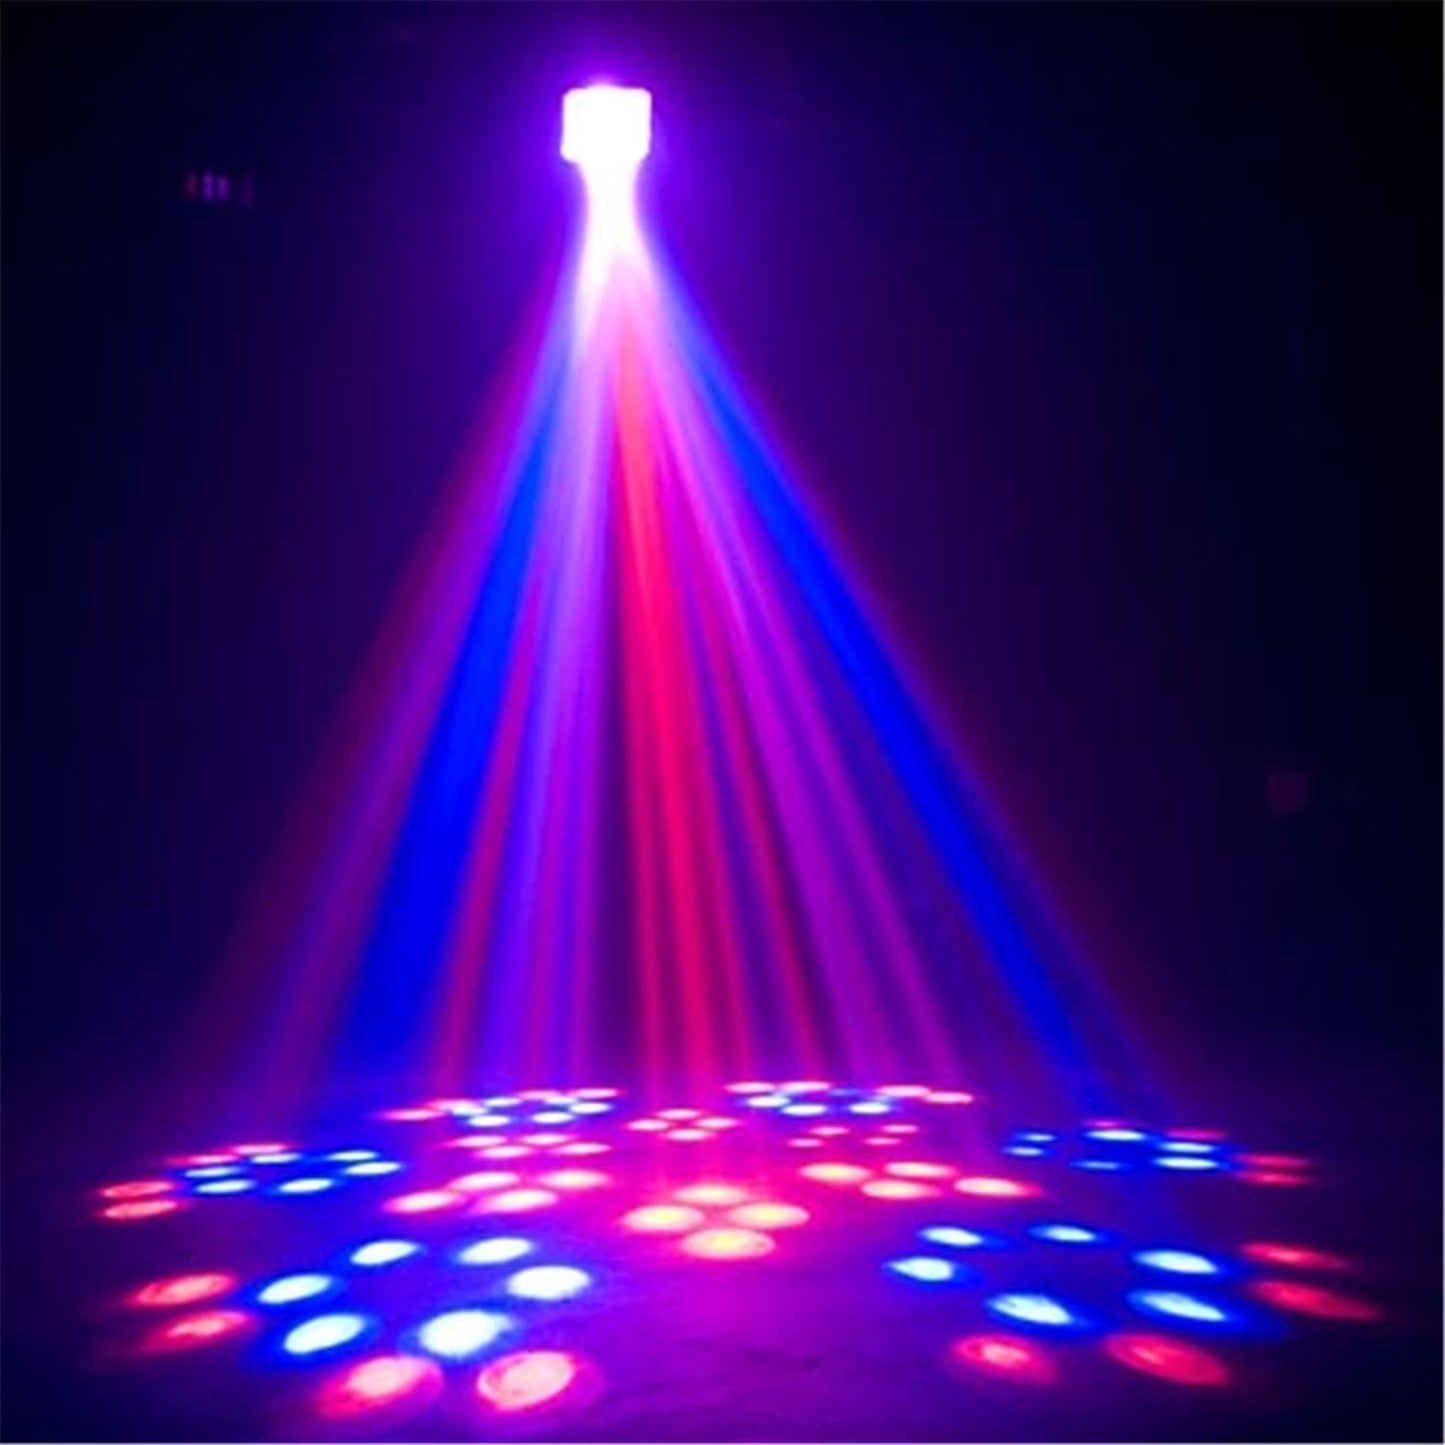 American DJ REVO-RAVE RGB LED DMX Effect Light - PSSL ProSound and Stage Lighting